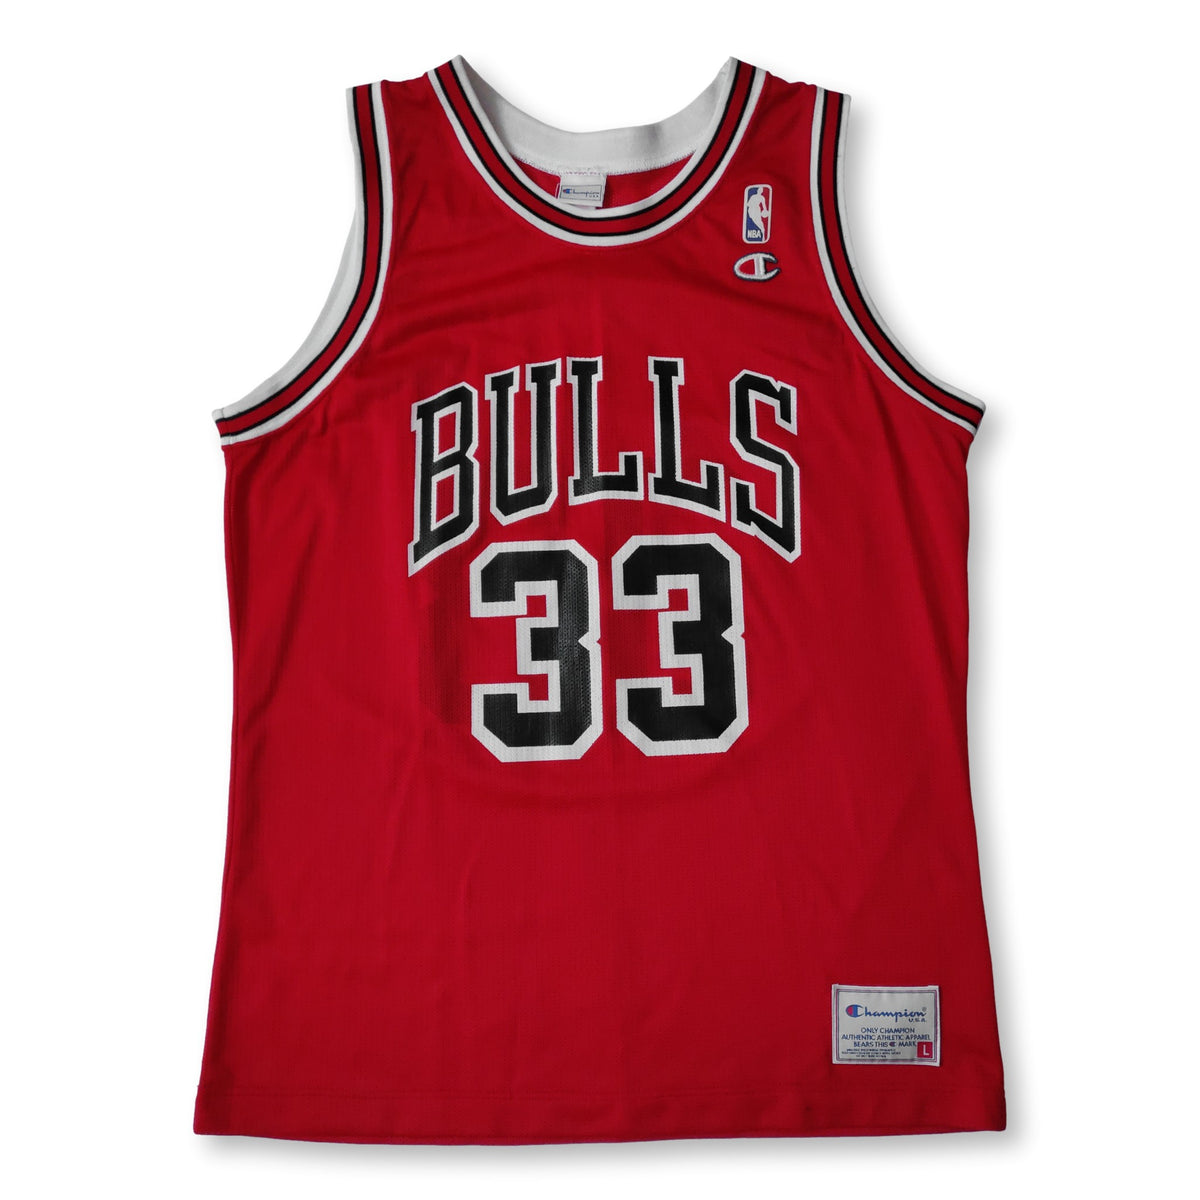 VTG Scottie Pippen #33 Chicago Bulls NBA Champion Jersey Size 48 Black